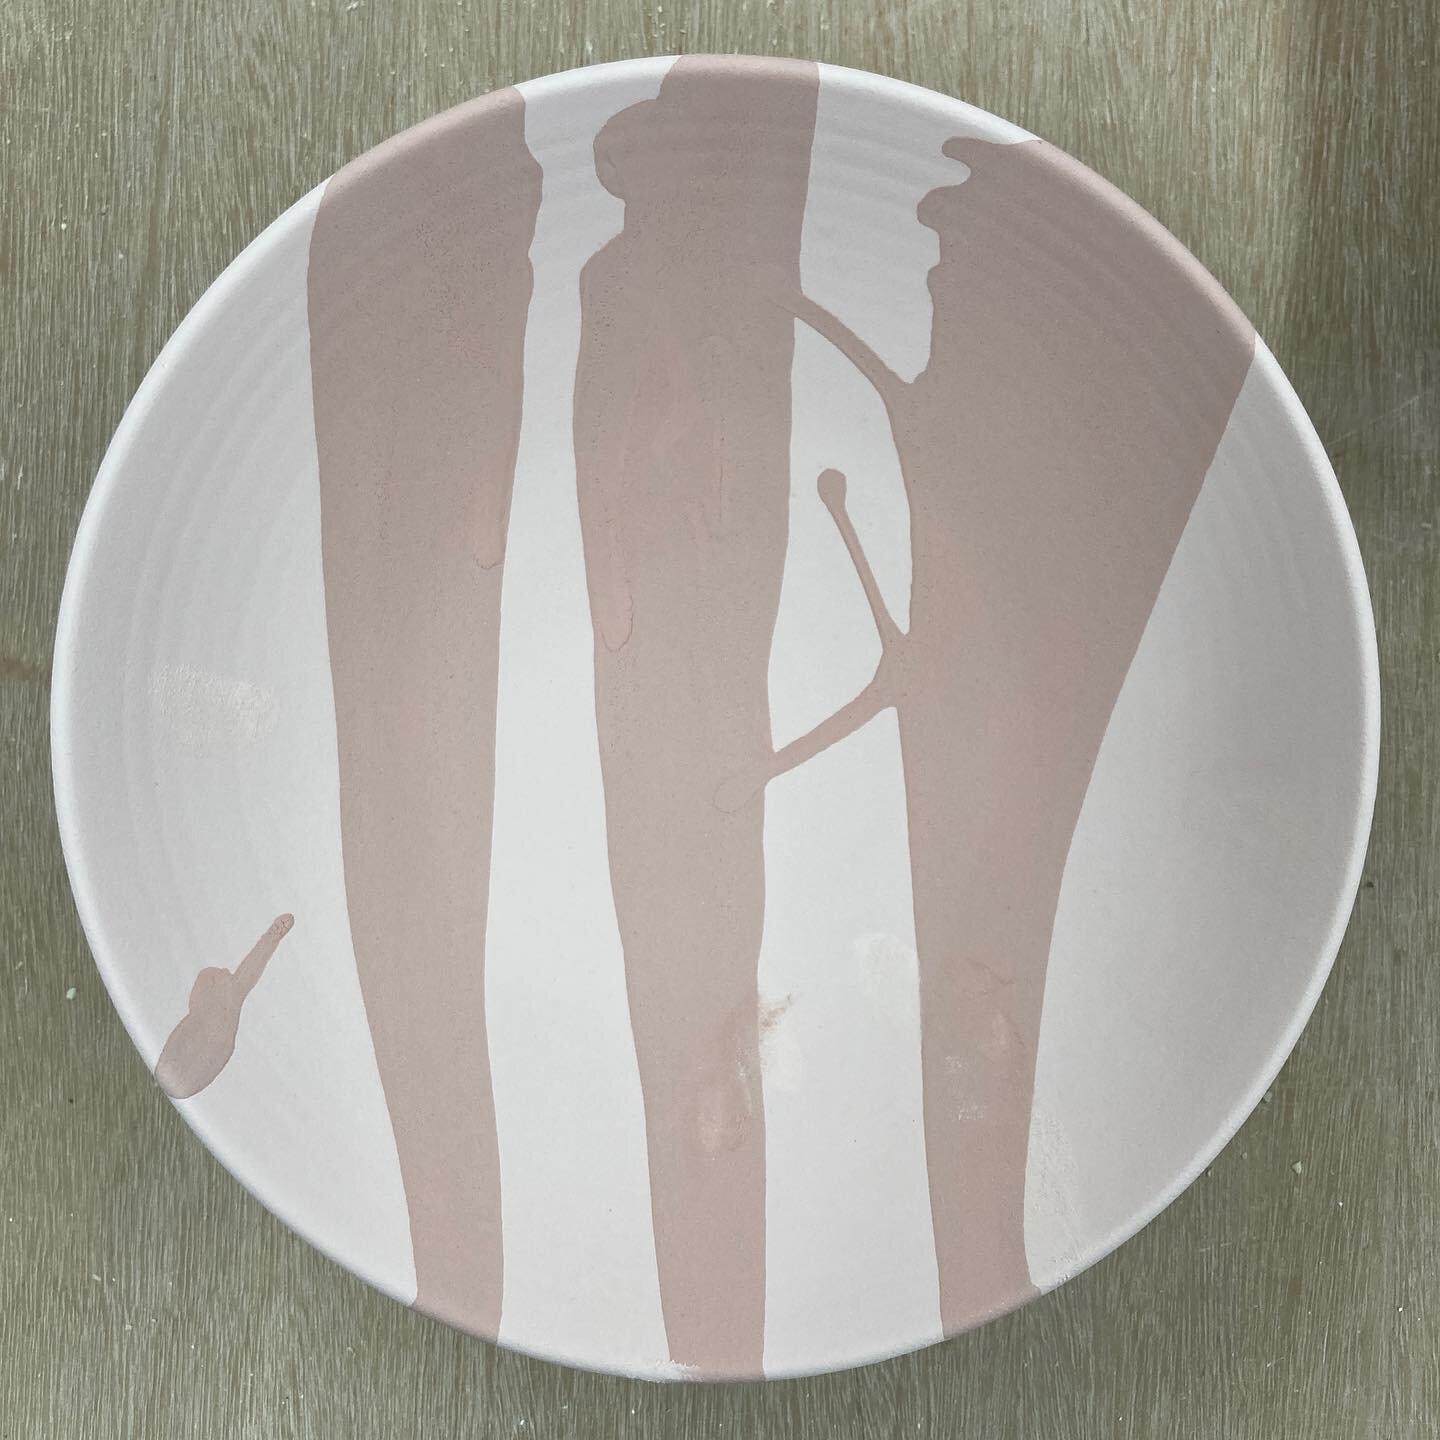 Crystalline Bowl ready for glaze firing.  https://www.davidmellordesign.com/craft-pottery-and-woodware/craft-pottery-ranges/michael-taylor-bowls/crystalline-glaze-bowl-27cm-michael-taylor.  #michael_taylor_ceramics #contemporaryceramics #wheelthrown 